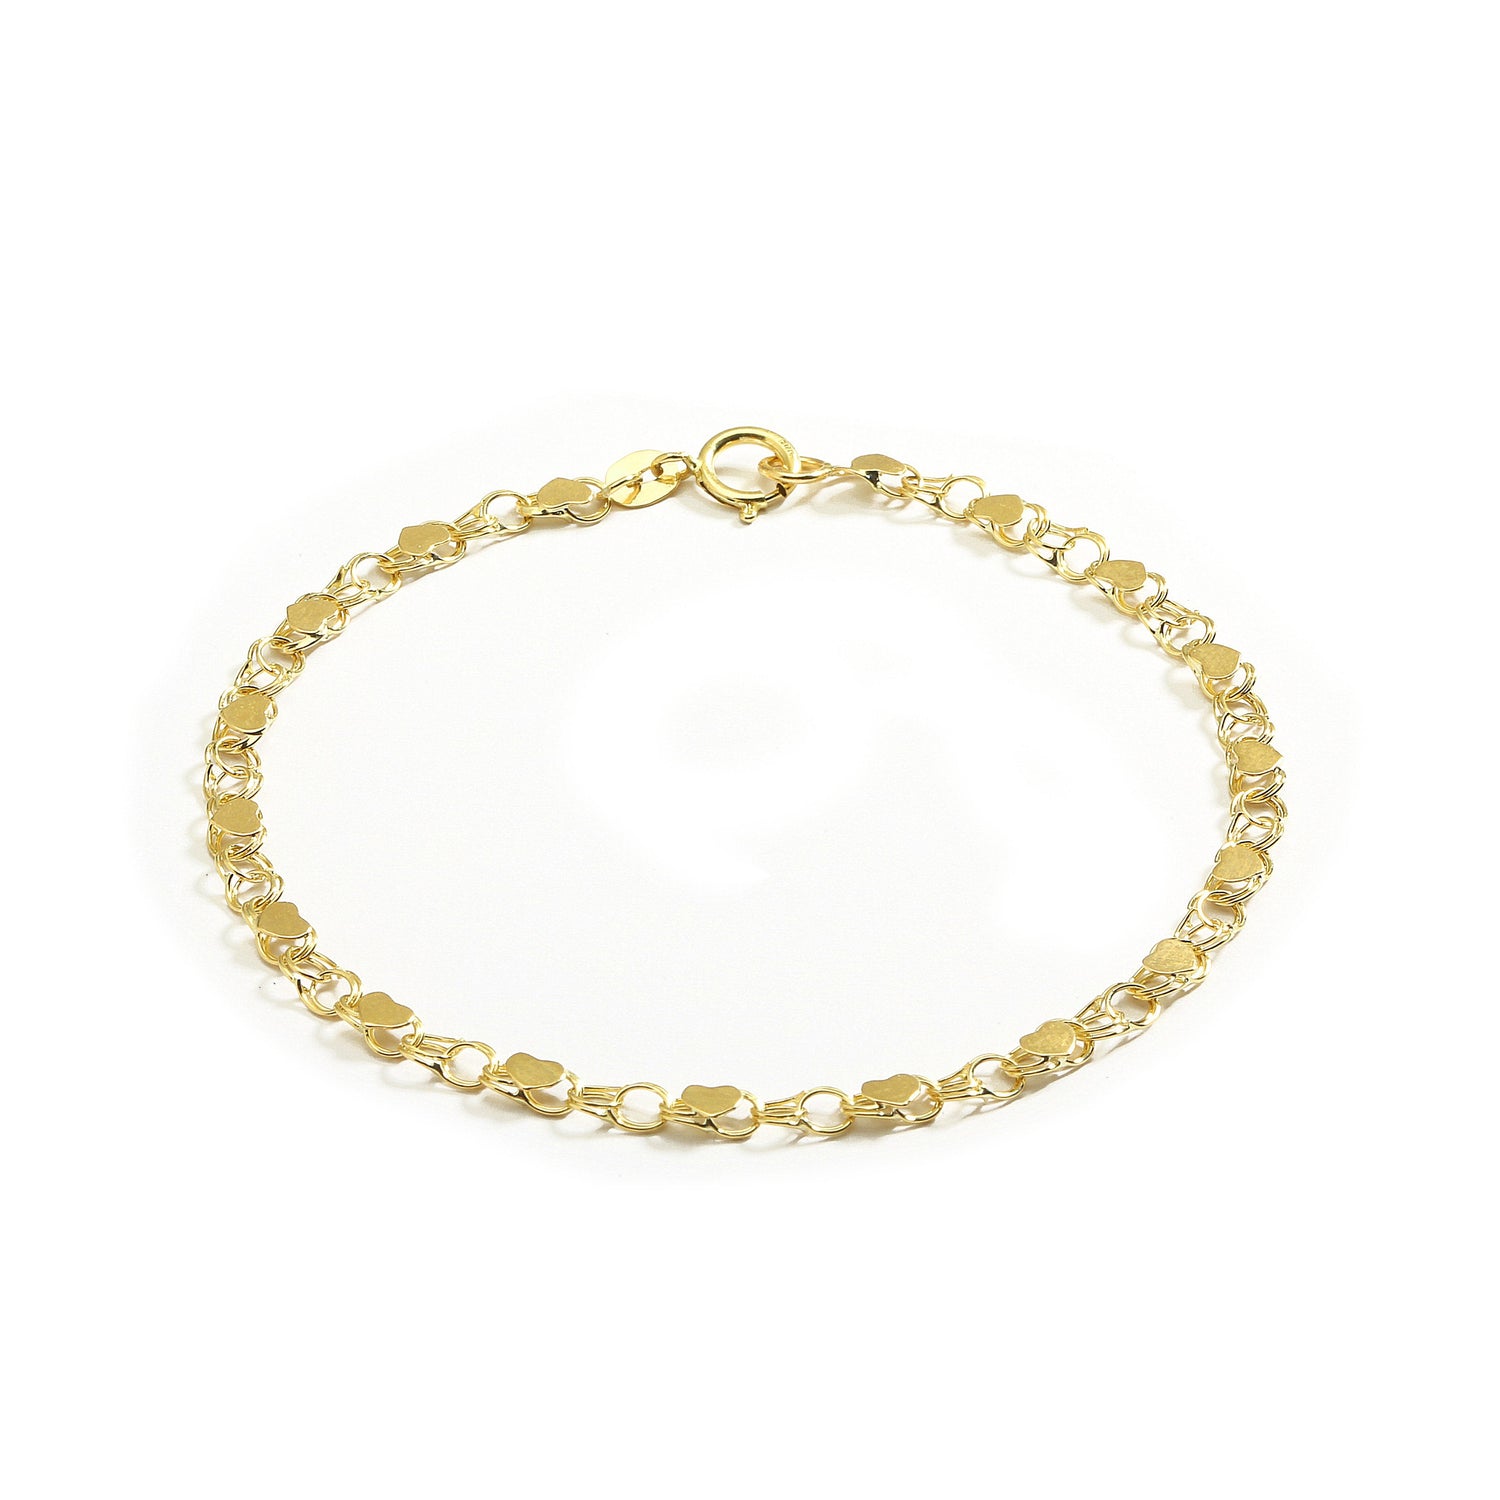 10k Fine Gold Heart Bracelet and Anklet for Women and Girls, (0.14